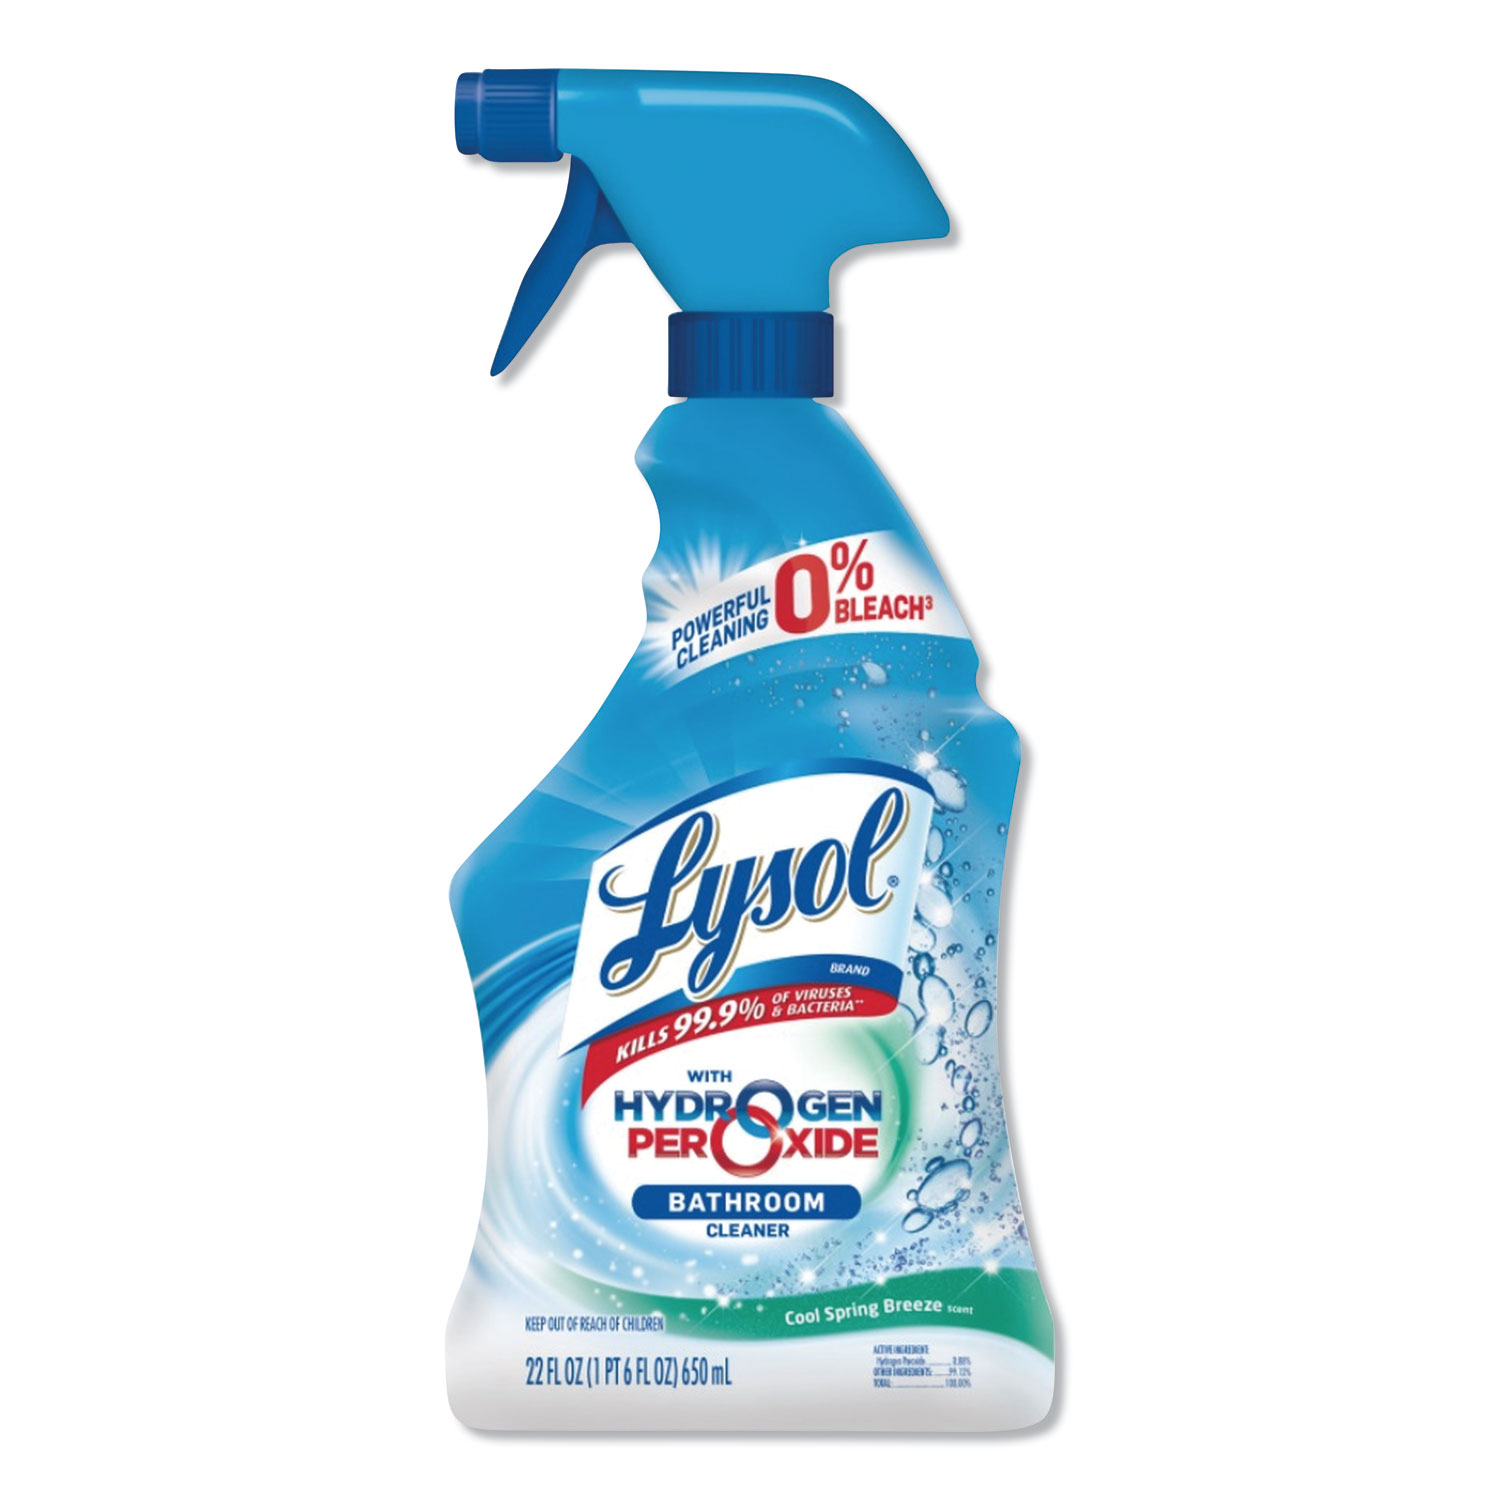  LYSOL Brand 19200-85668 Bathroom Cleaner with Hydrogen Peroxide, 22 oz Spray Bottle (RAC85668) 